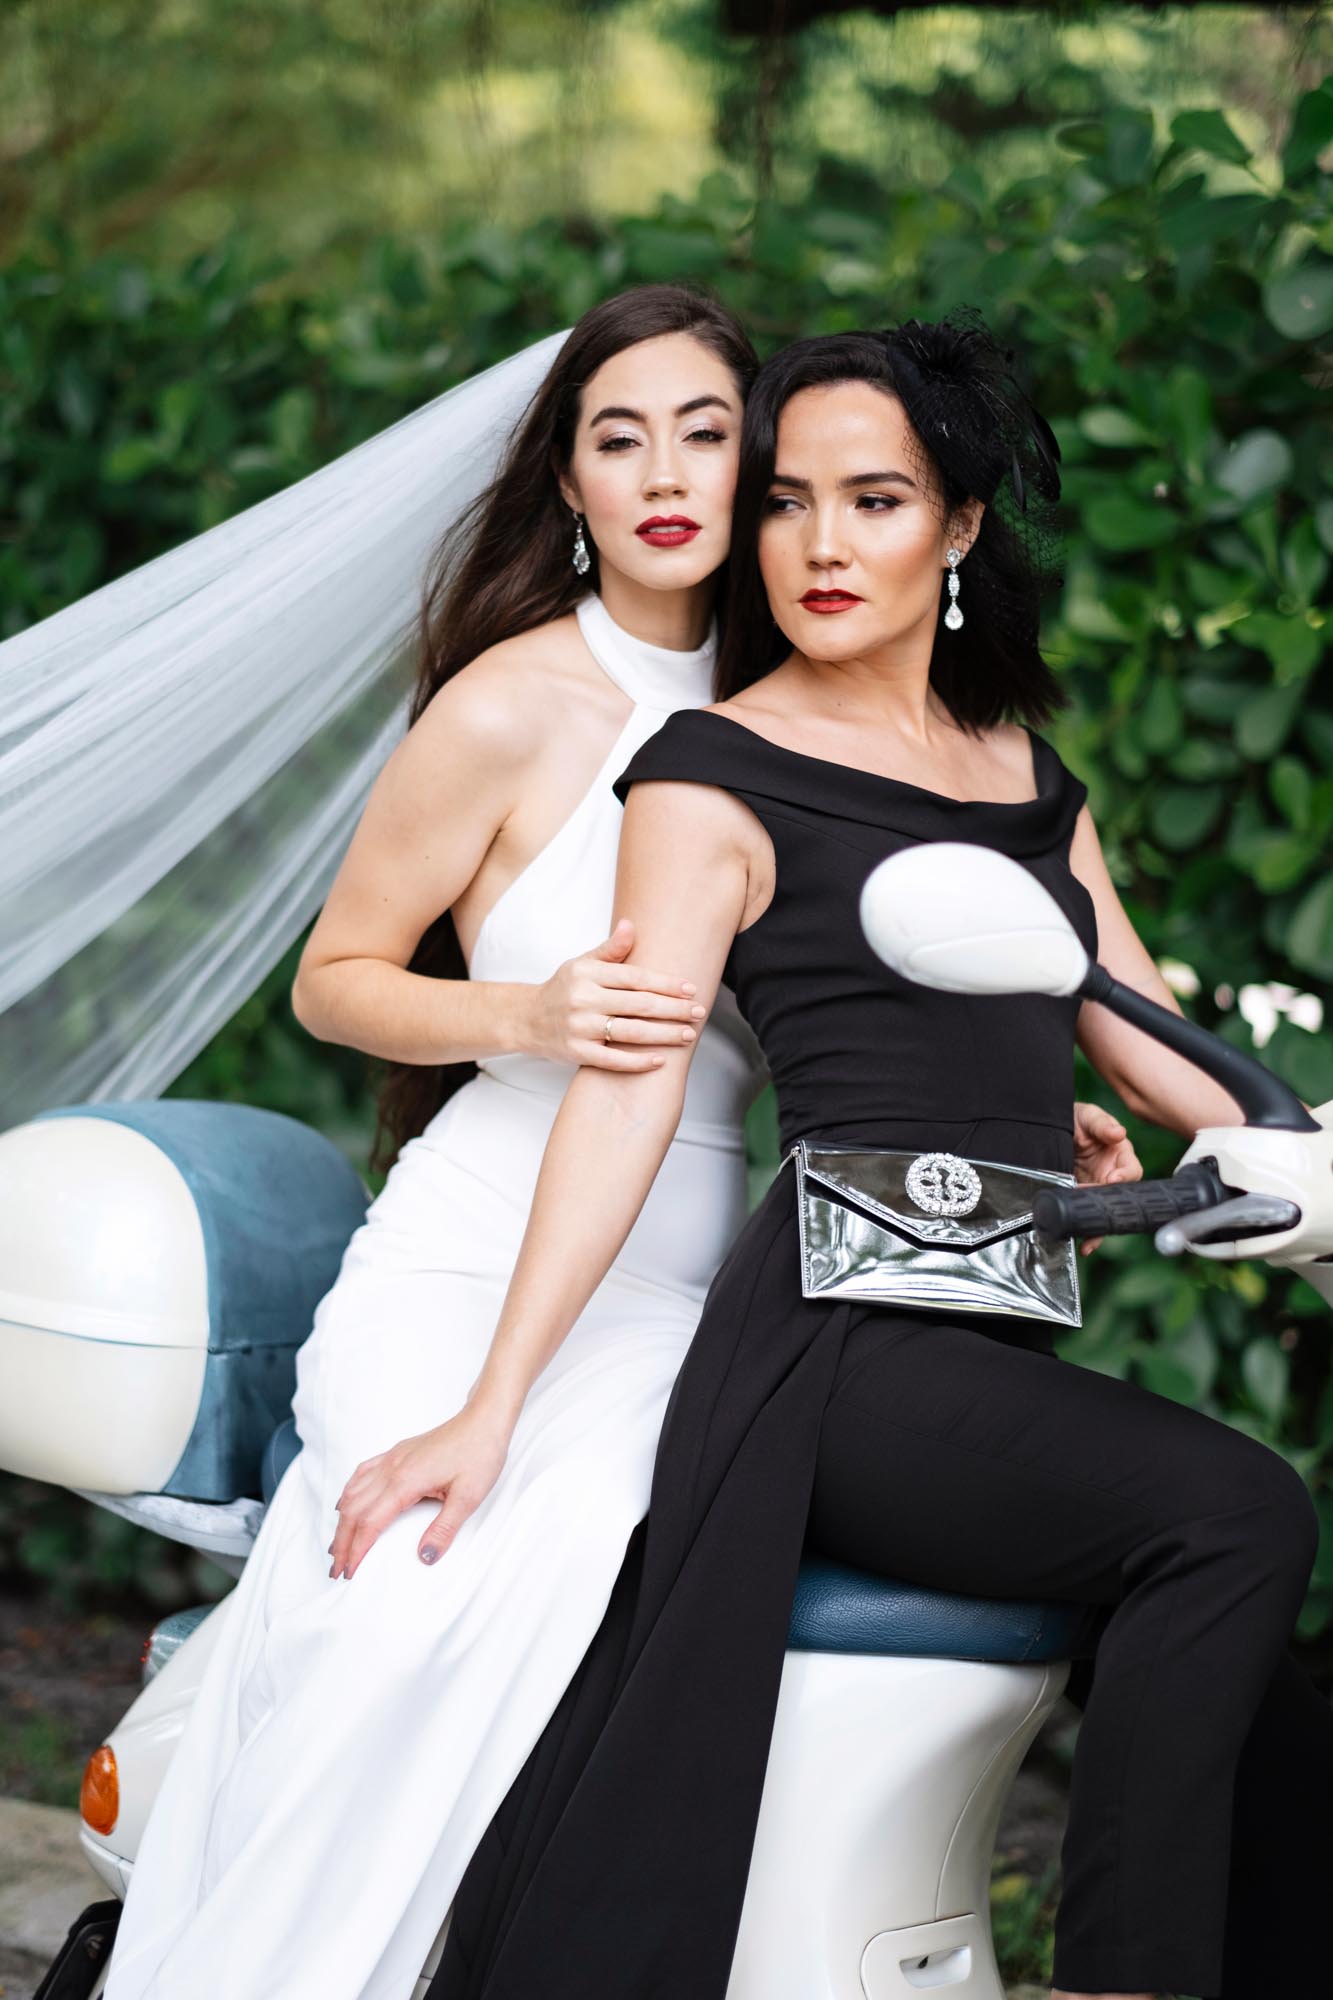 How bridal handbag brand The Mrs. Clutch celebrates the LGBTQ+ community 365 days a year | Featured on Equally Wed, the leading LGBTQ+ wedding magazine